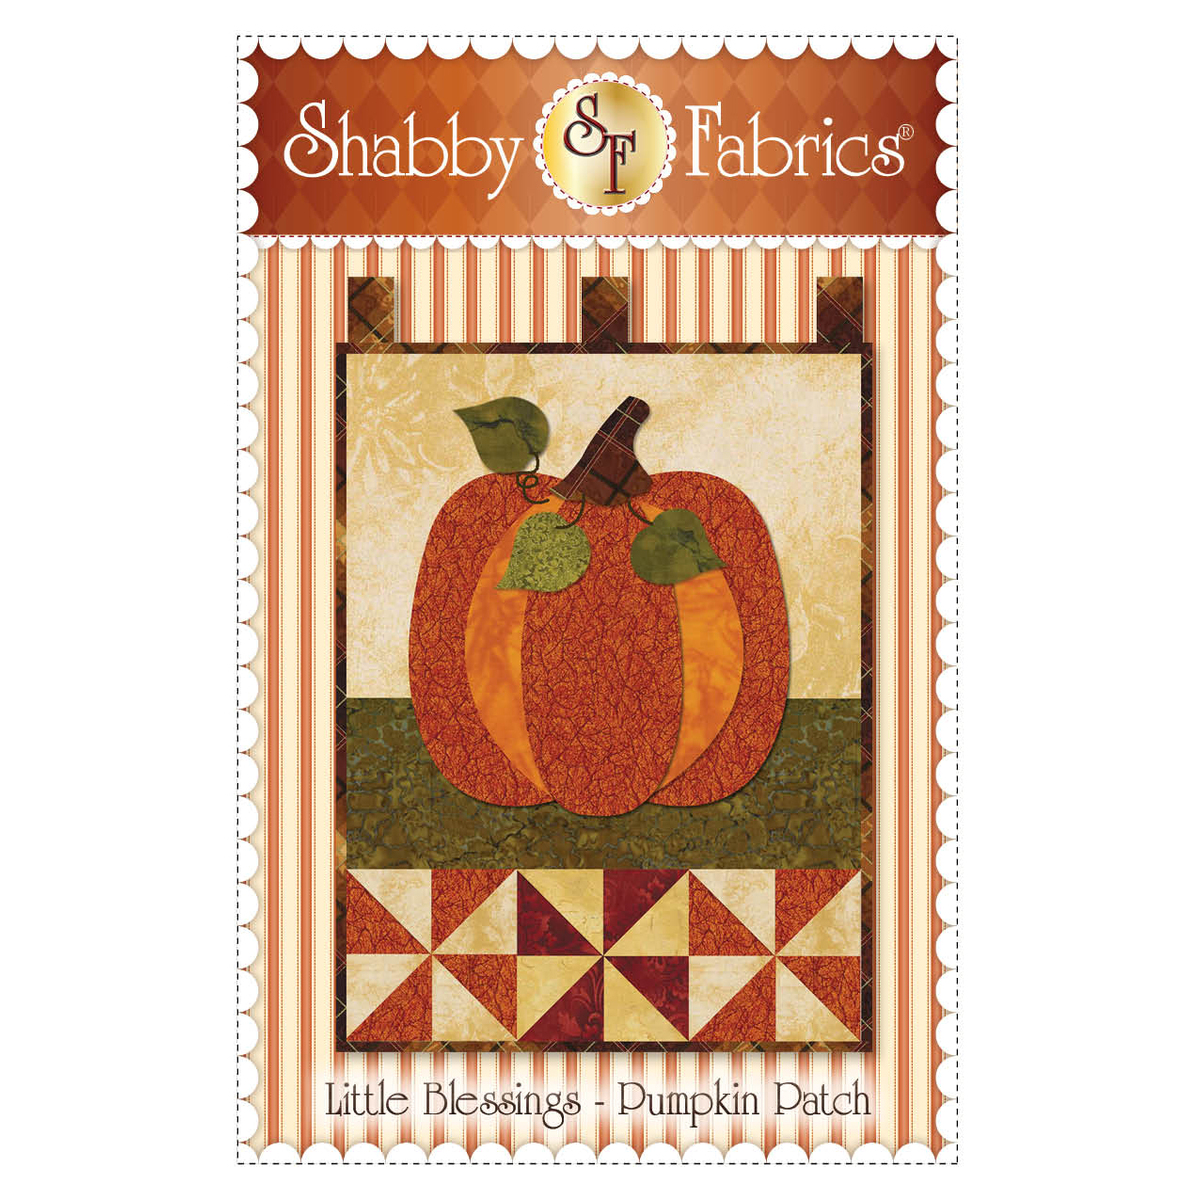 https://cdn.shabbyfabrics.com/image/1200x1200/pid-24166-little-blessings-pumpkin-patch-front-cover.jpg?1640716981